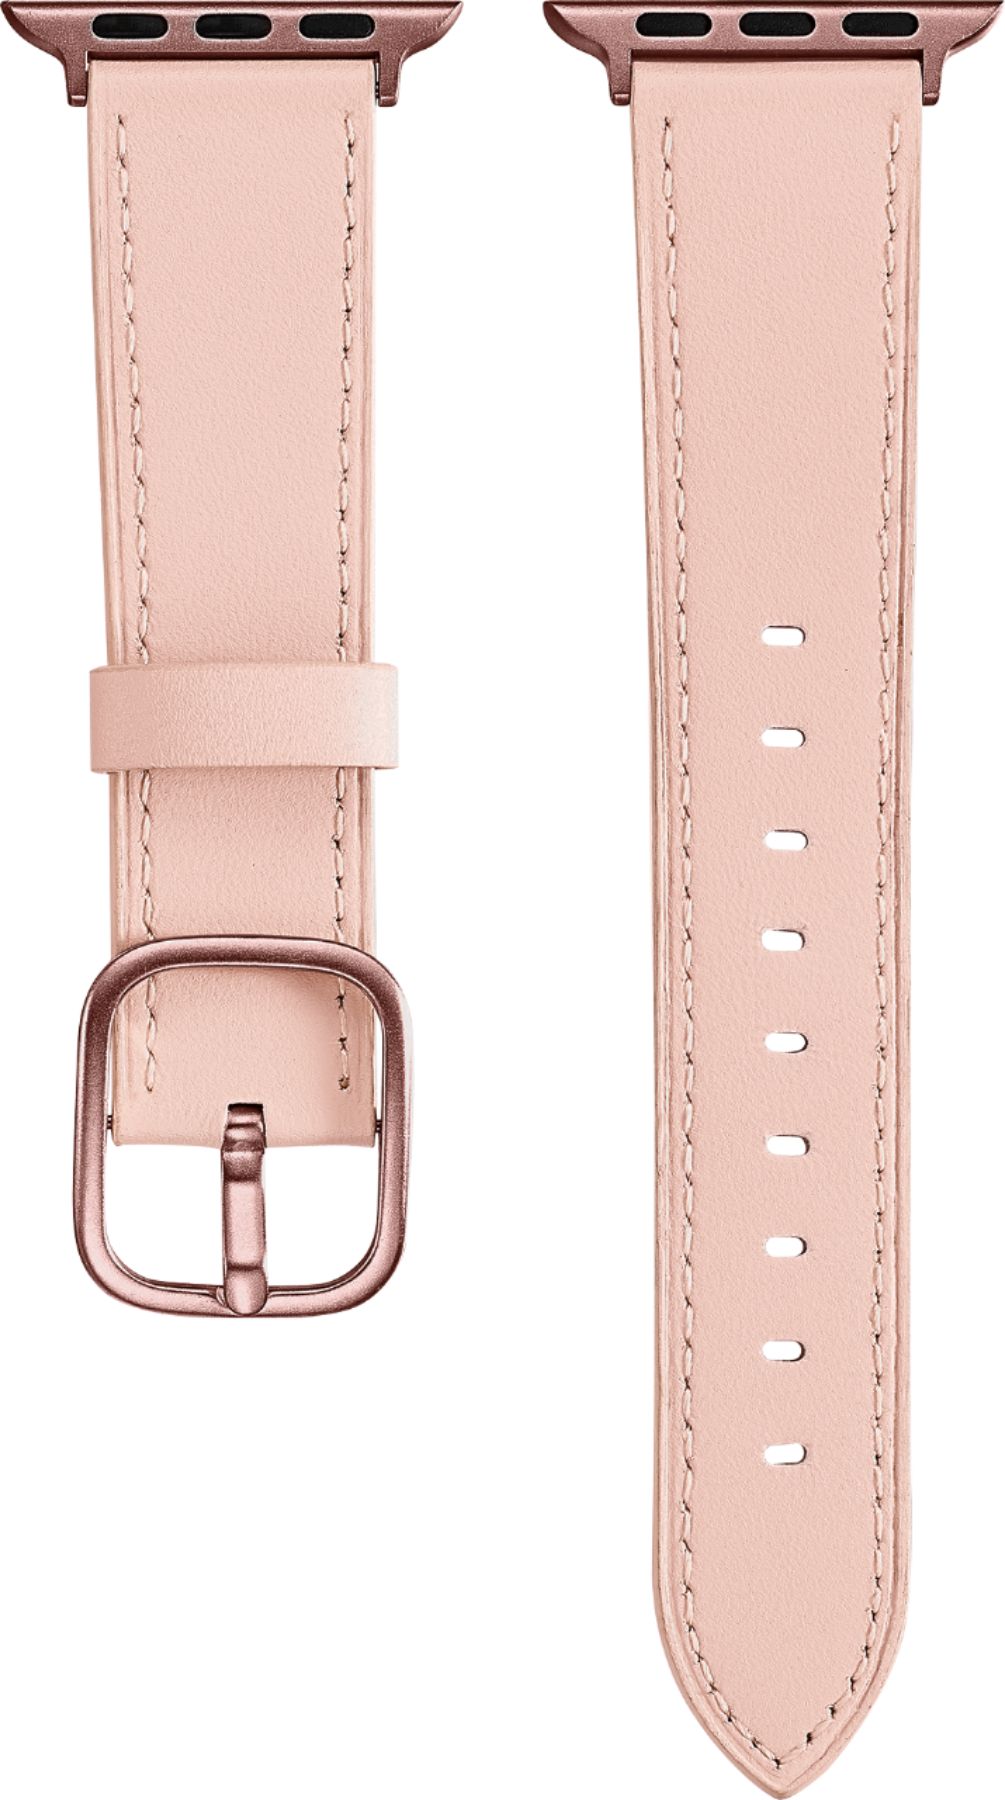 Party Wear Fancy Ladies Pink Leather Strap Watch